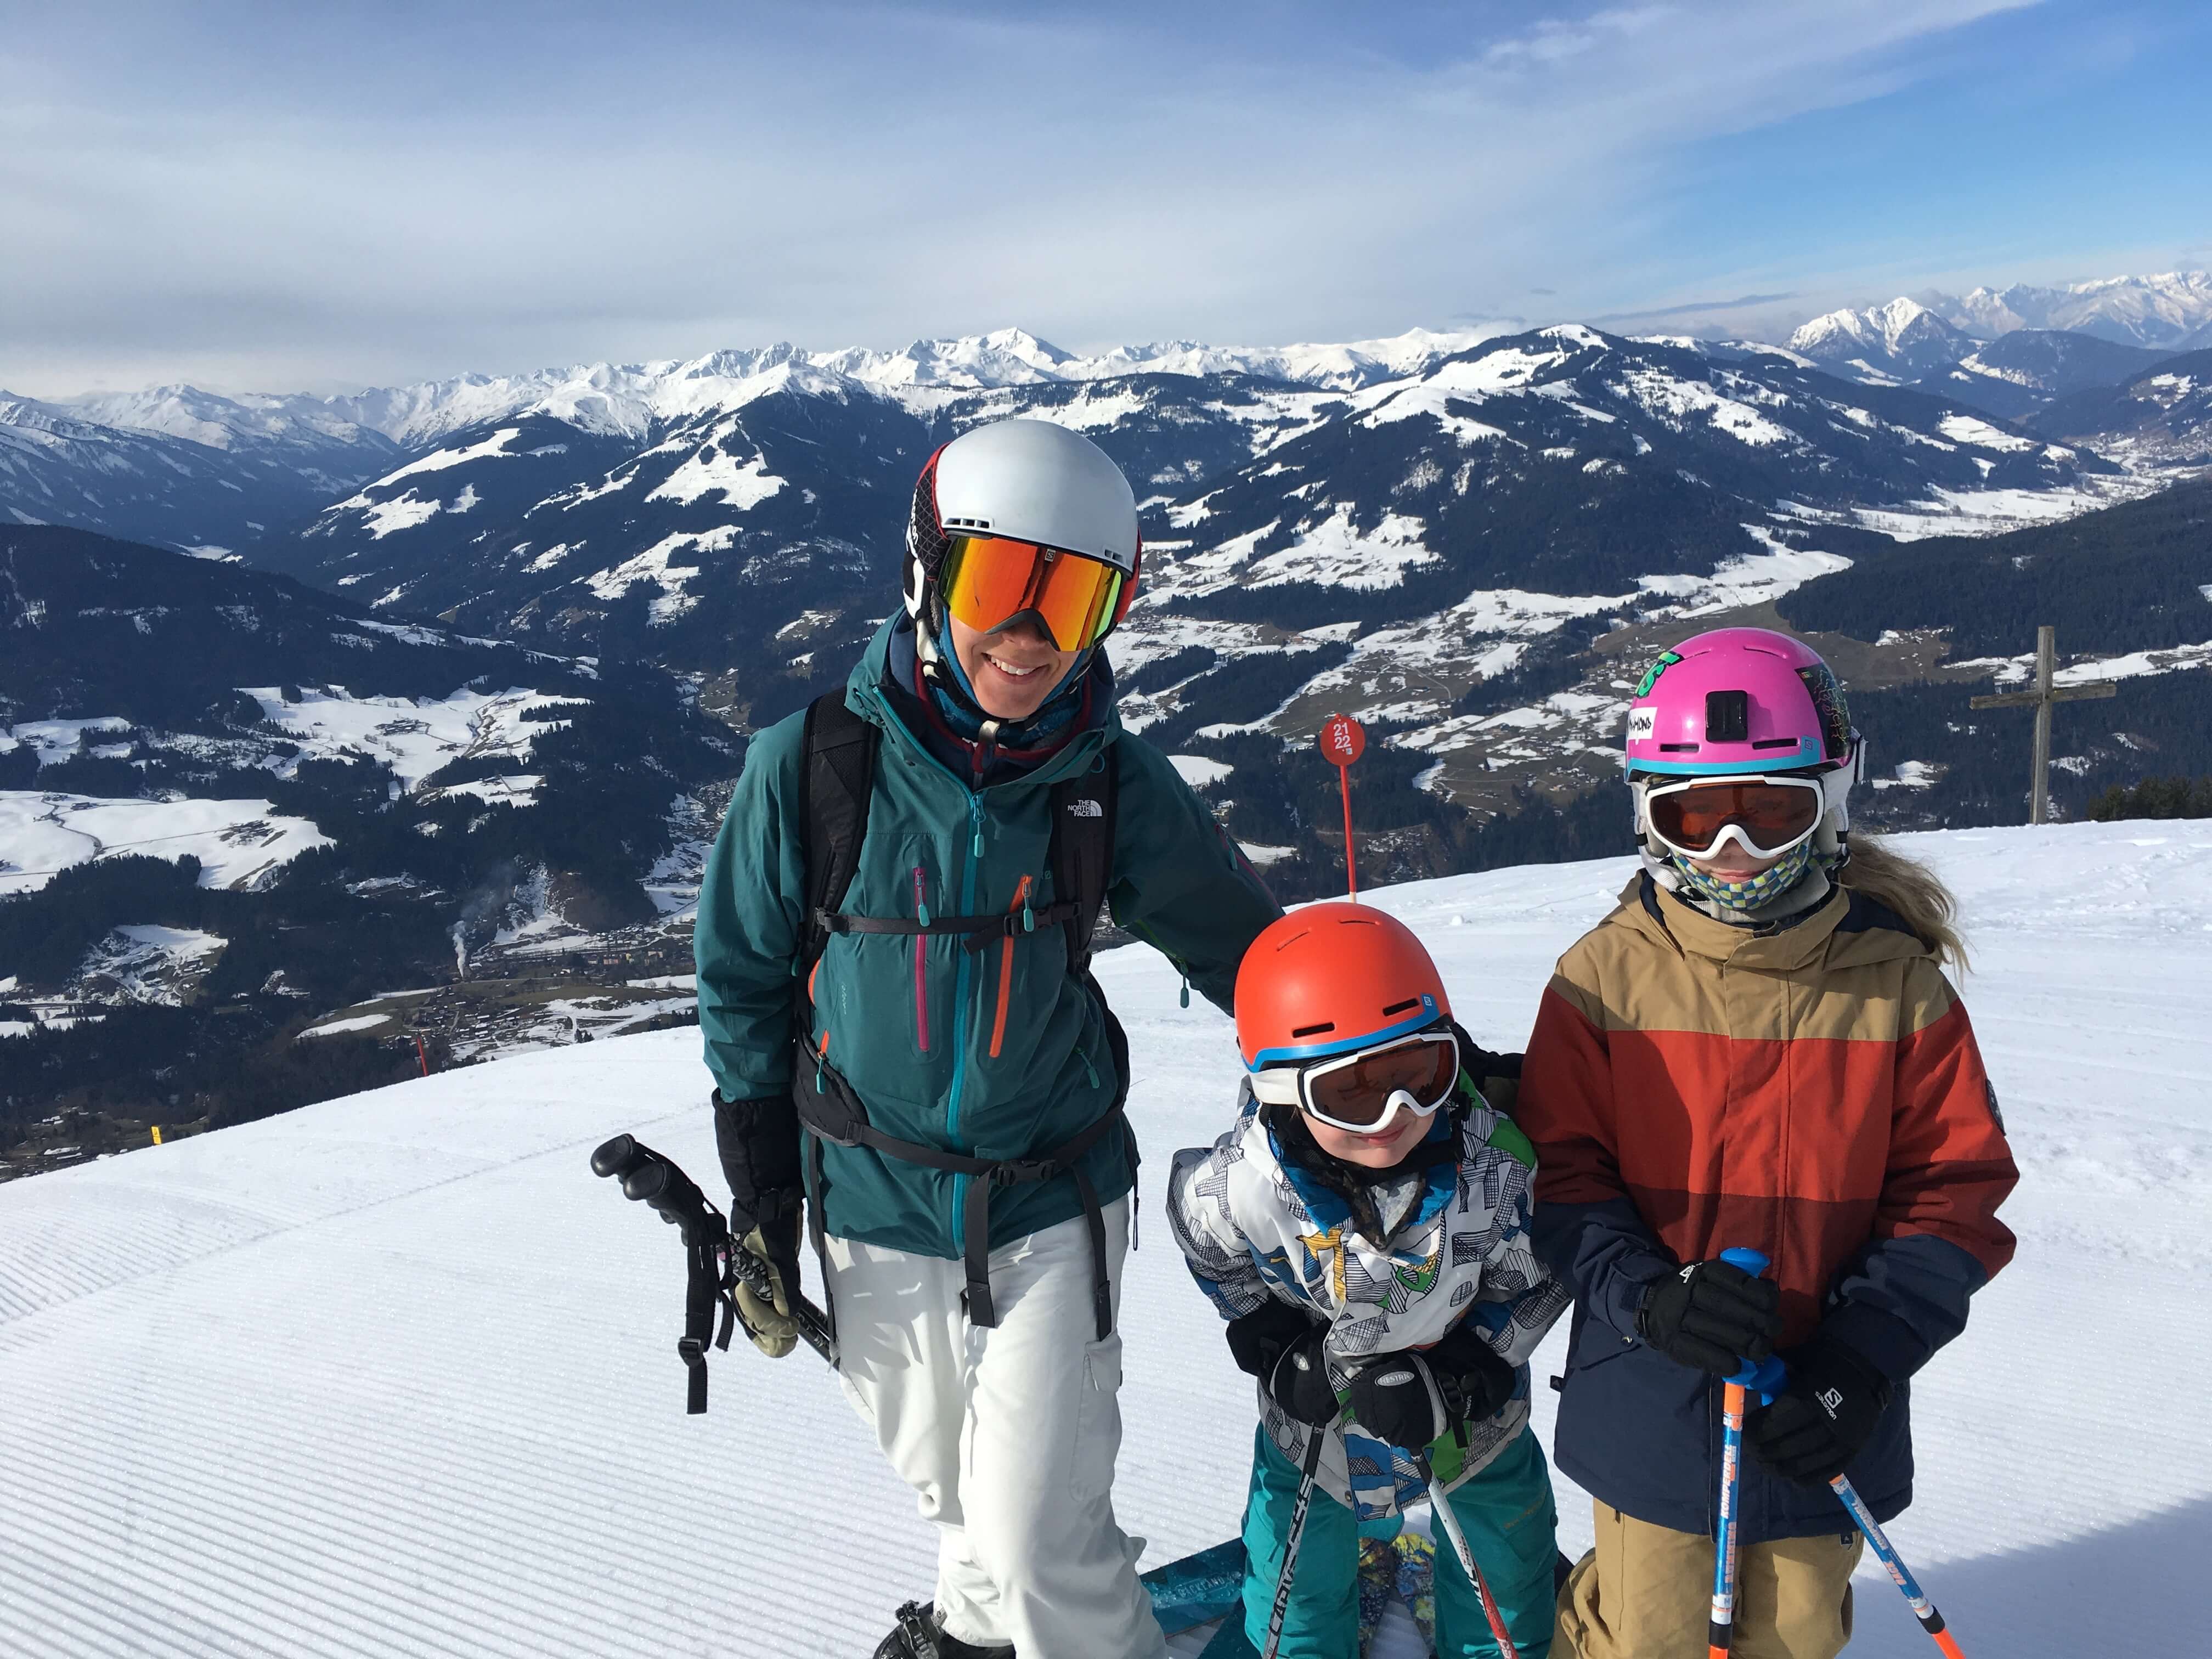 A ski mum with kids